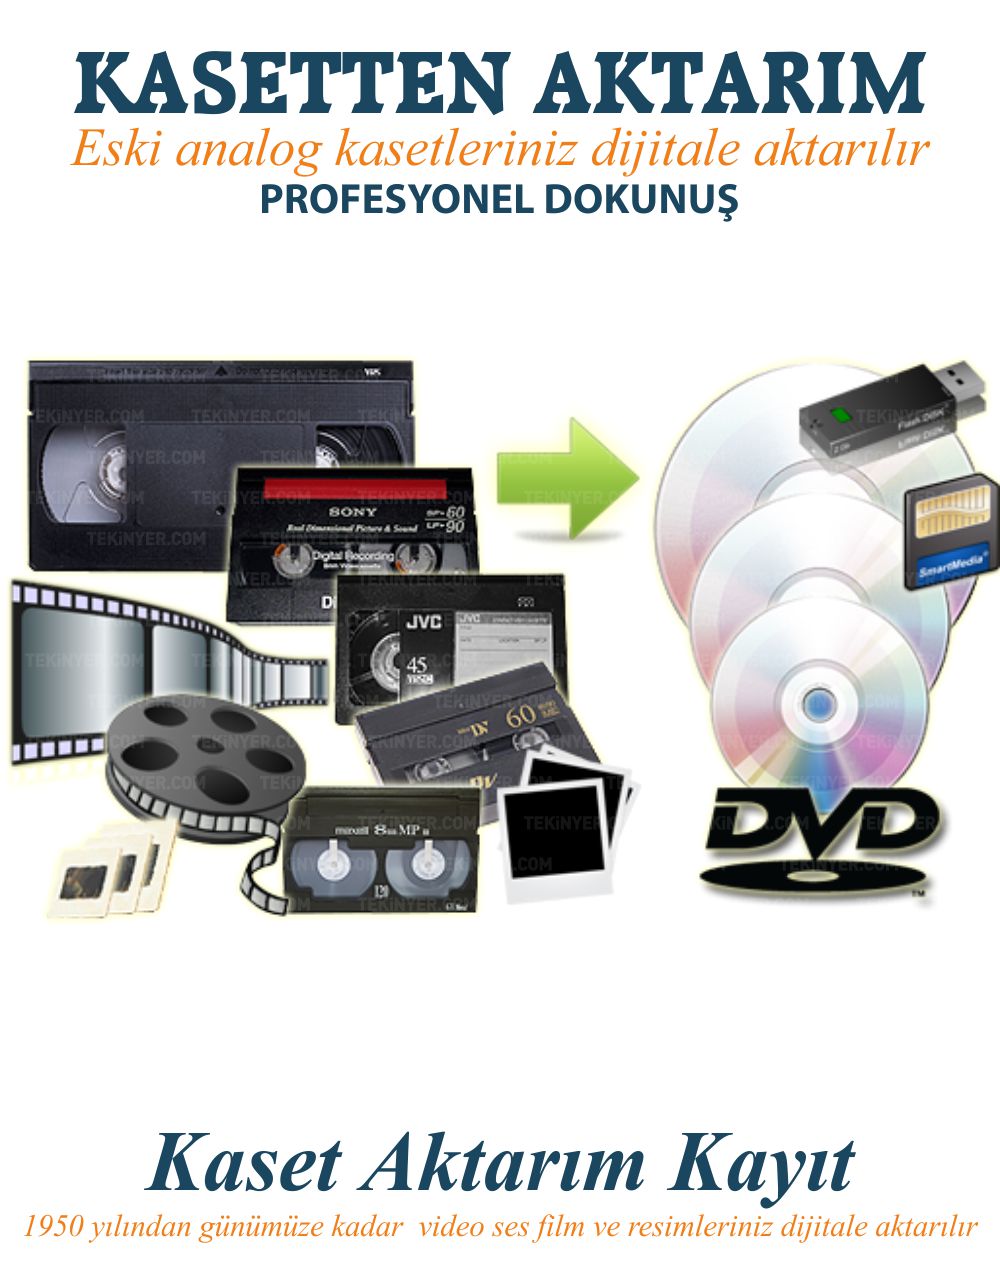 8mm Makara Film DVD Kayıt